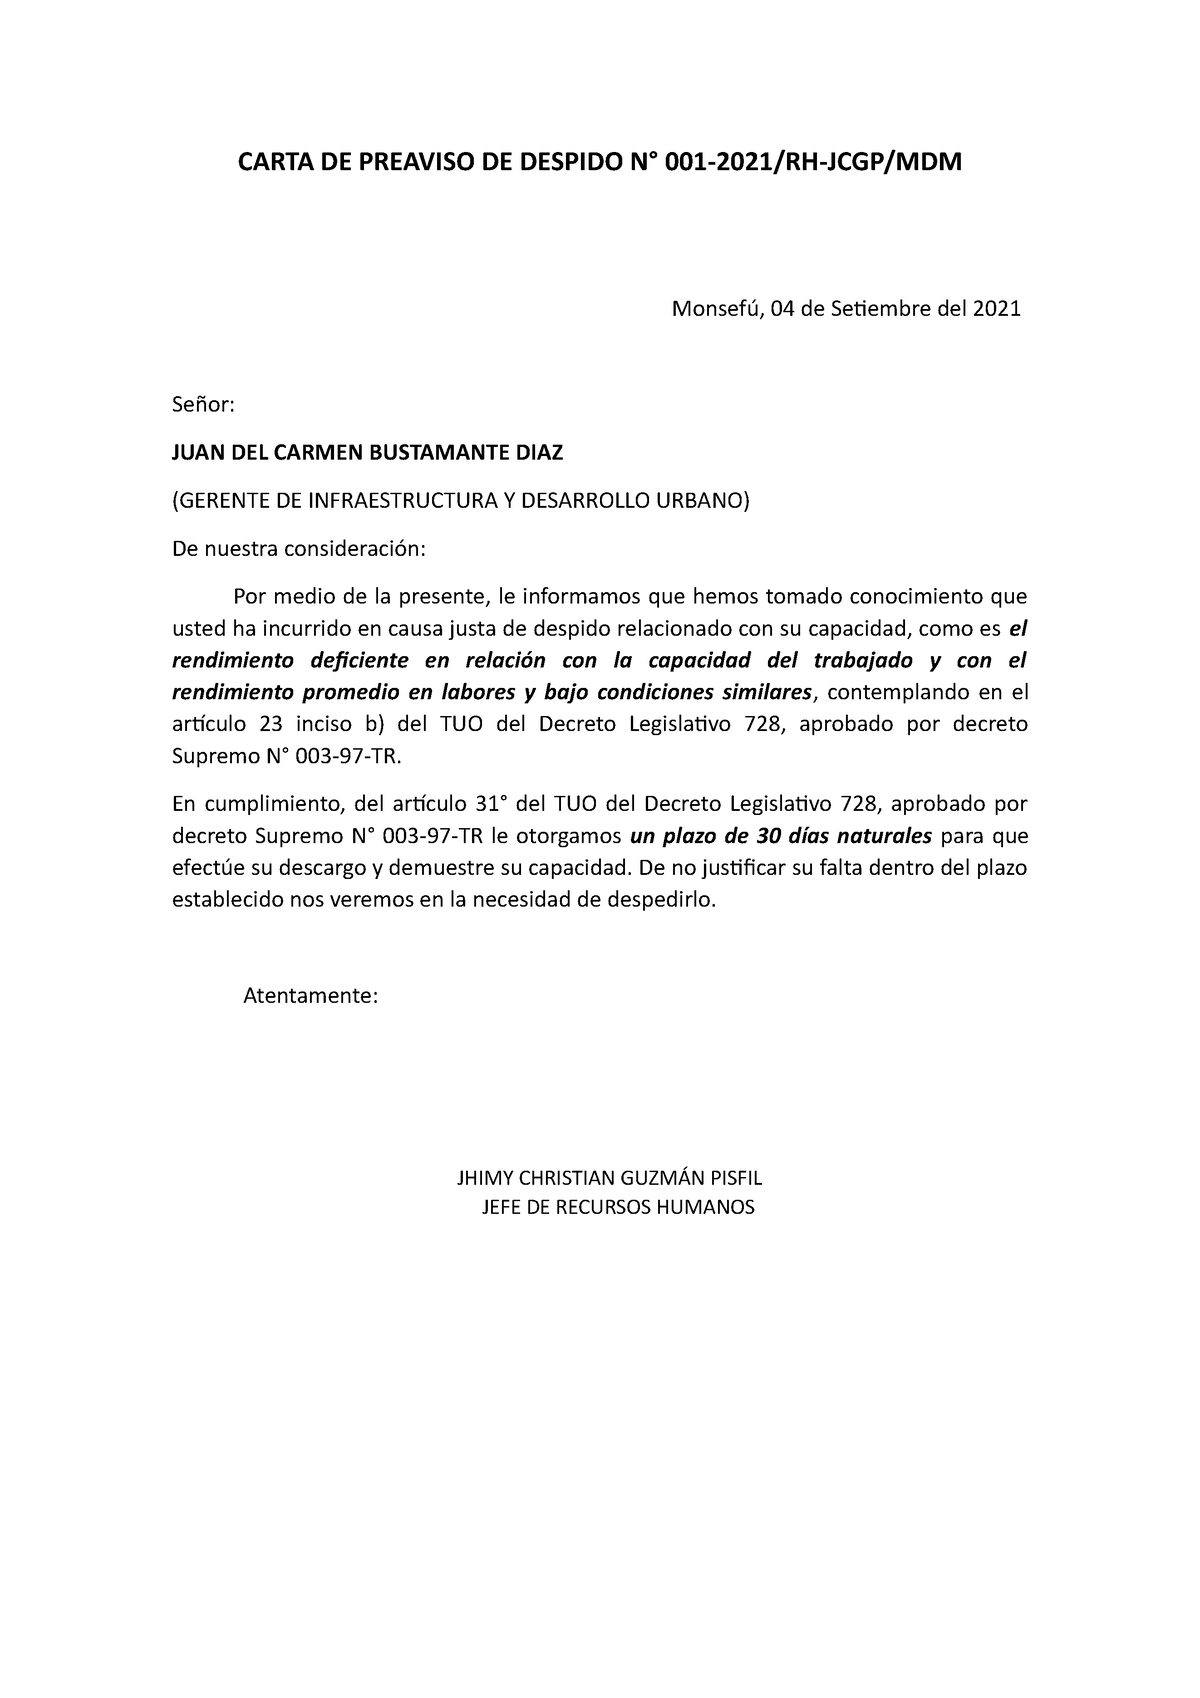 Carta De Preaviso De Despido Carta De Preaviso De Despido N° 001 2021rh Jcgpmdm Monsefú 04 1346